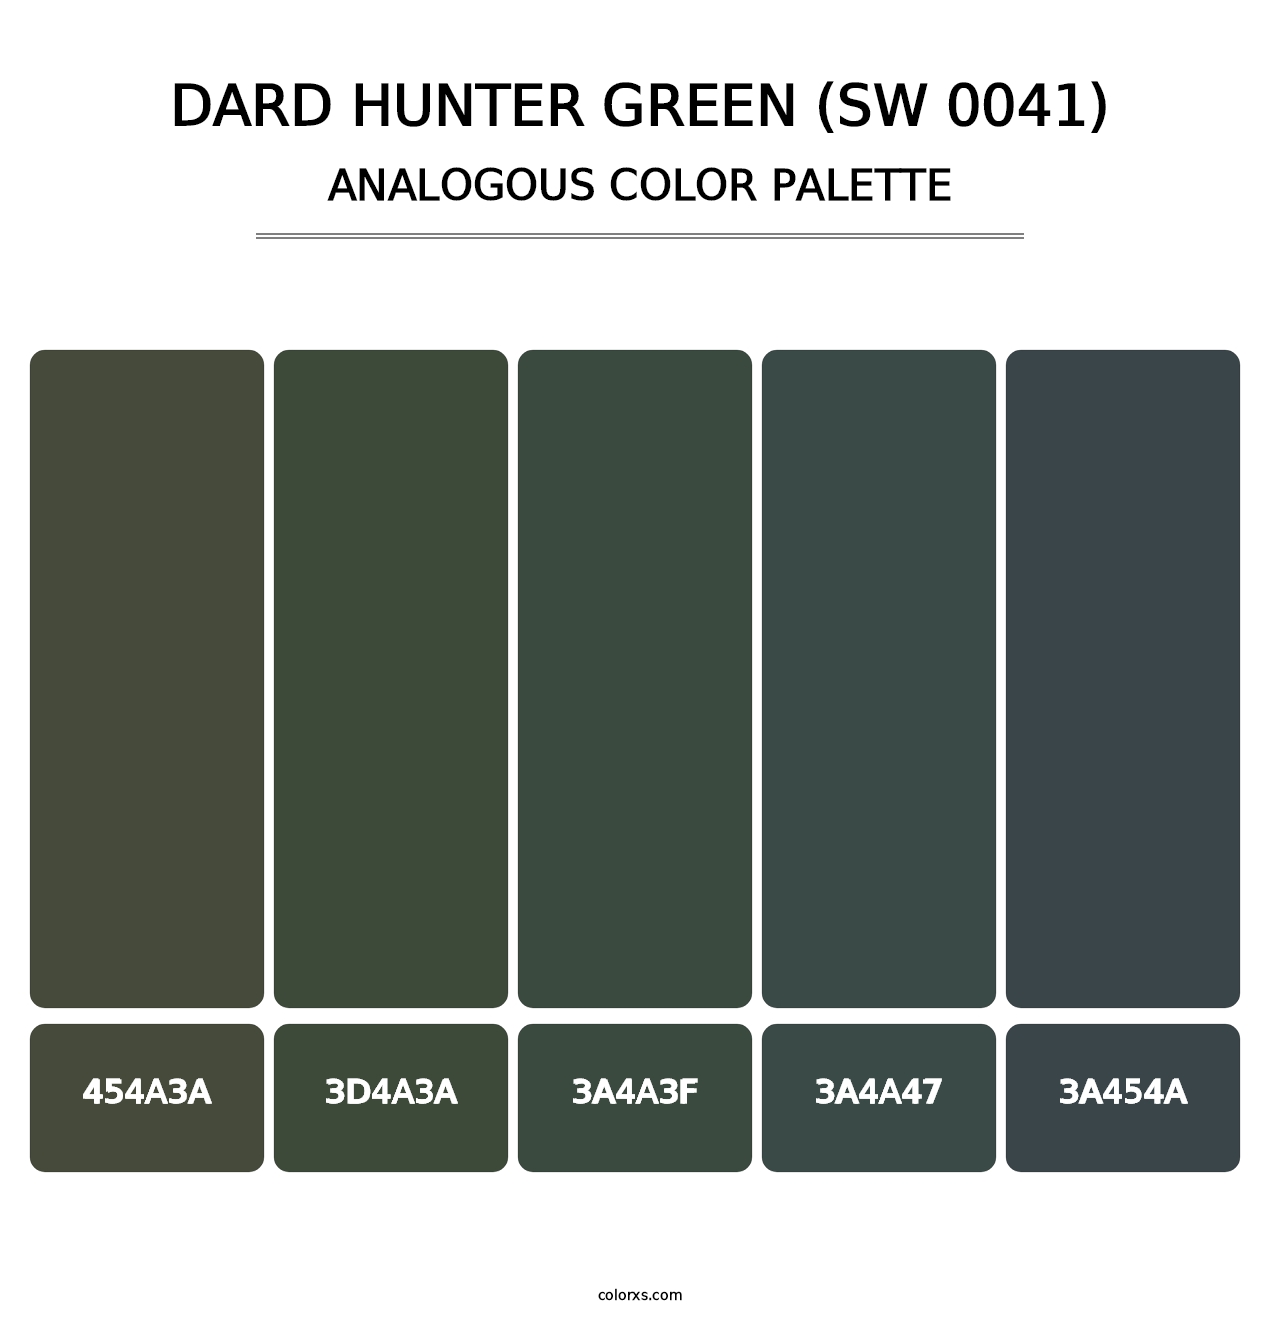 Dard Hunter Green (SW 0041) - Analogous Color Palette